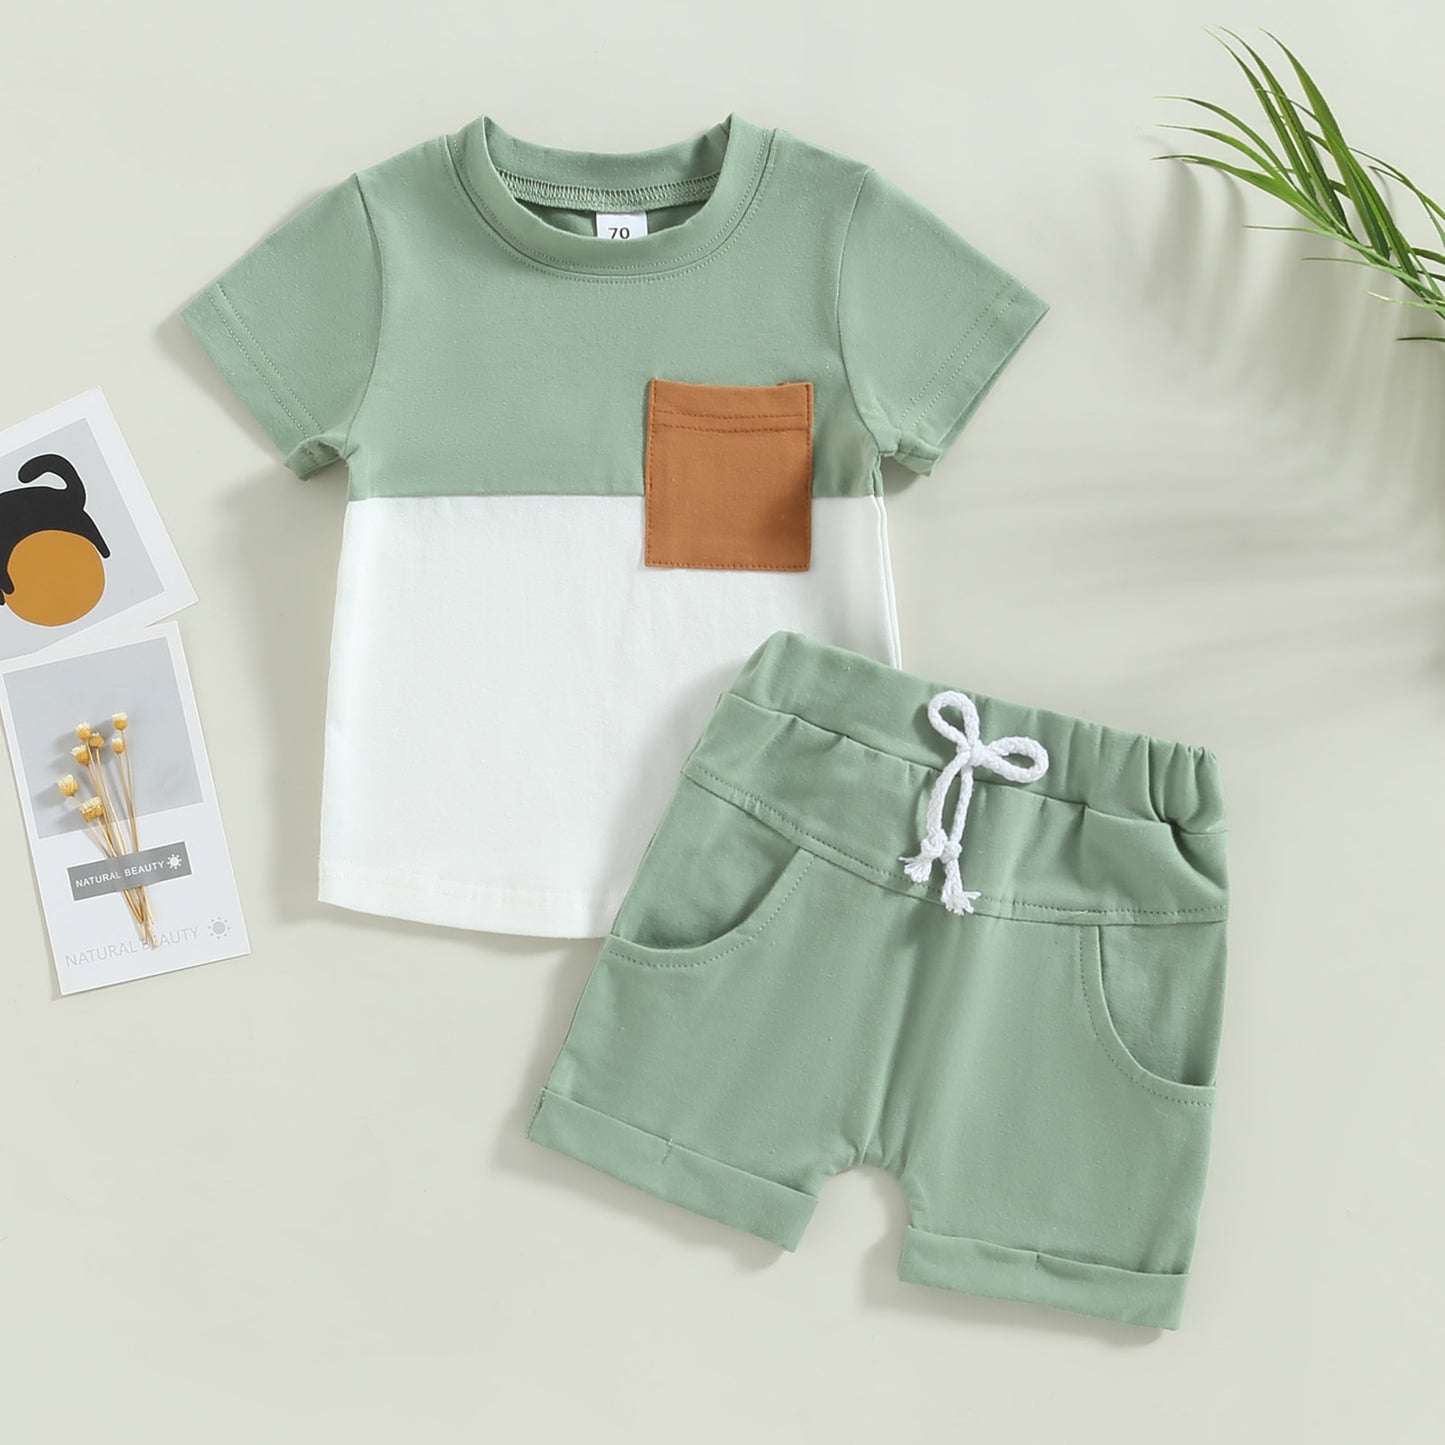 2 Pc Set: 0-3T Toddler Infant Baby Tan & Green Block Tee and Shorts Summer Set